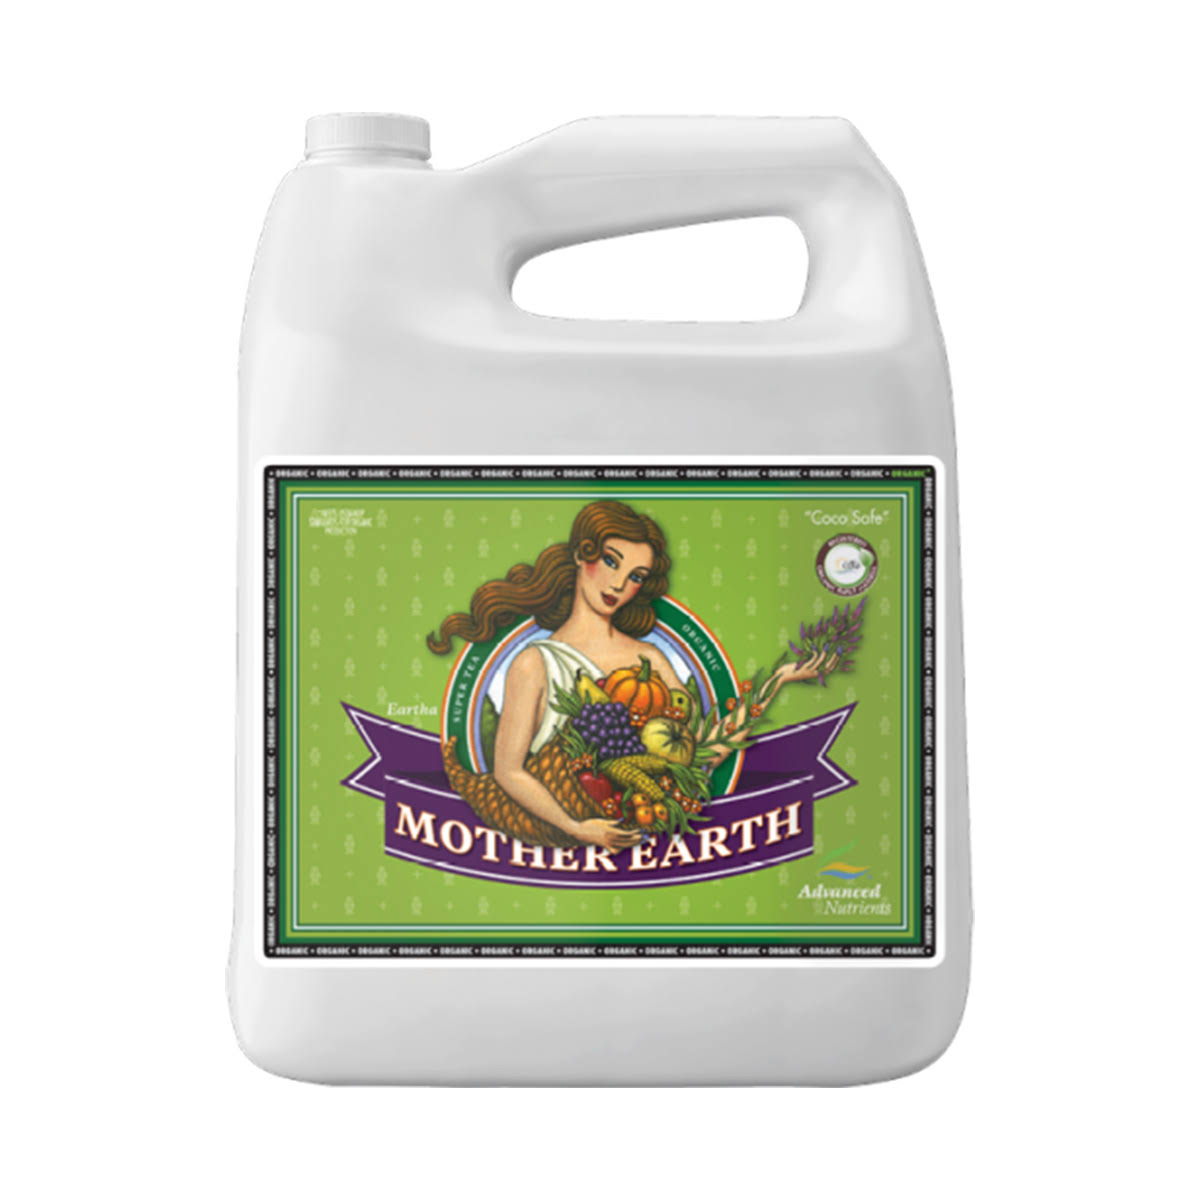 Advanced Nutrients Mother Earth Super Tea Organic OIM | HydroPros.com 4 Liter